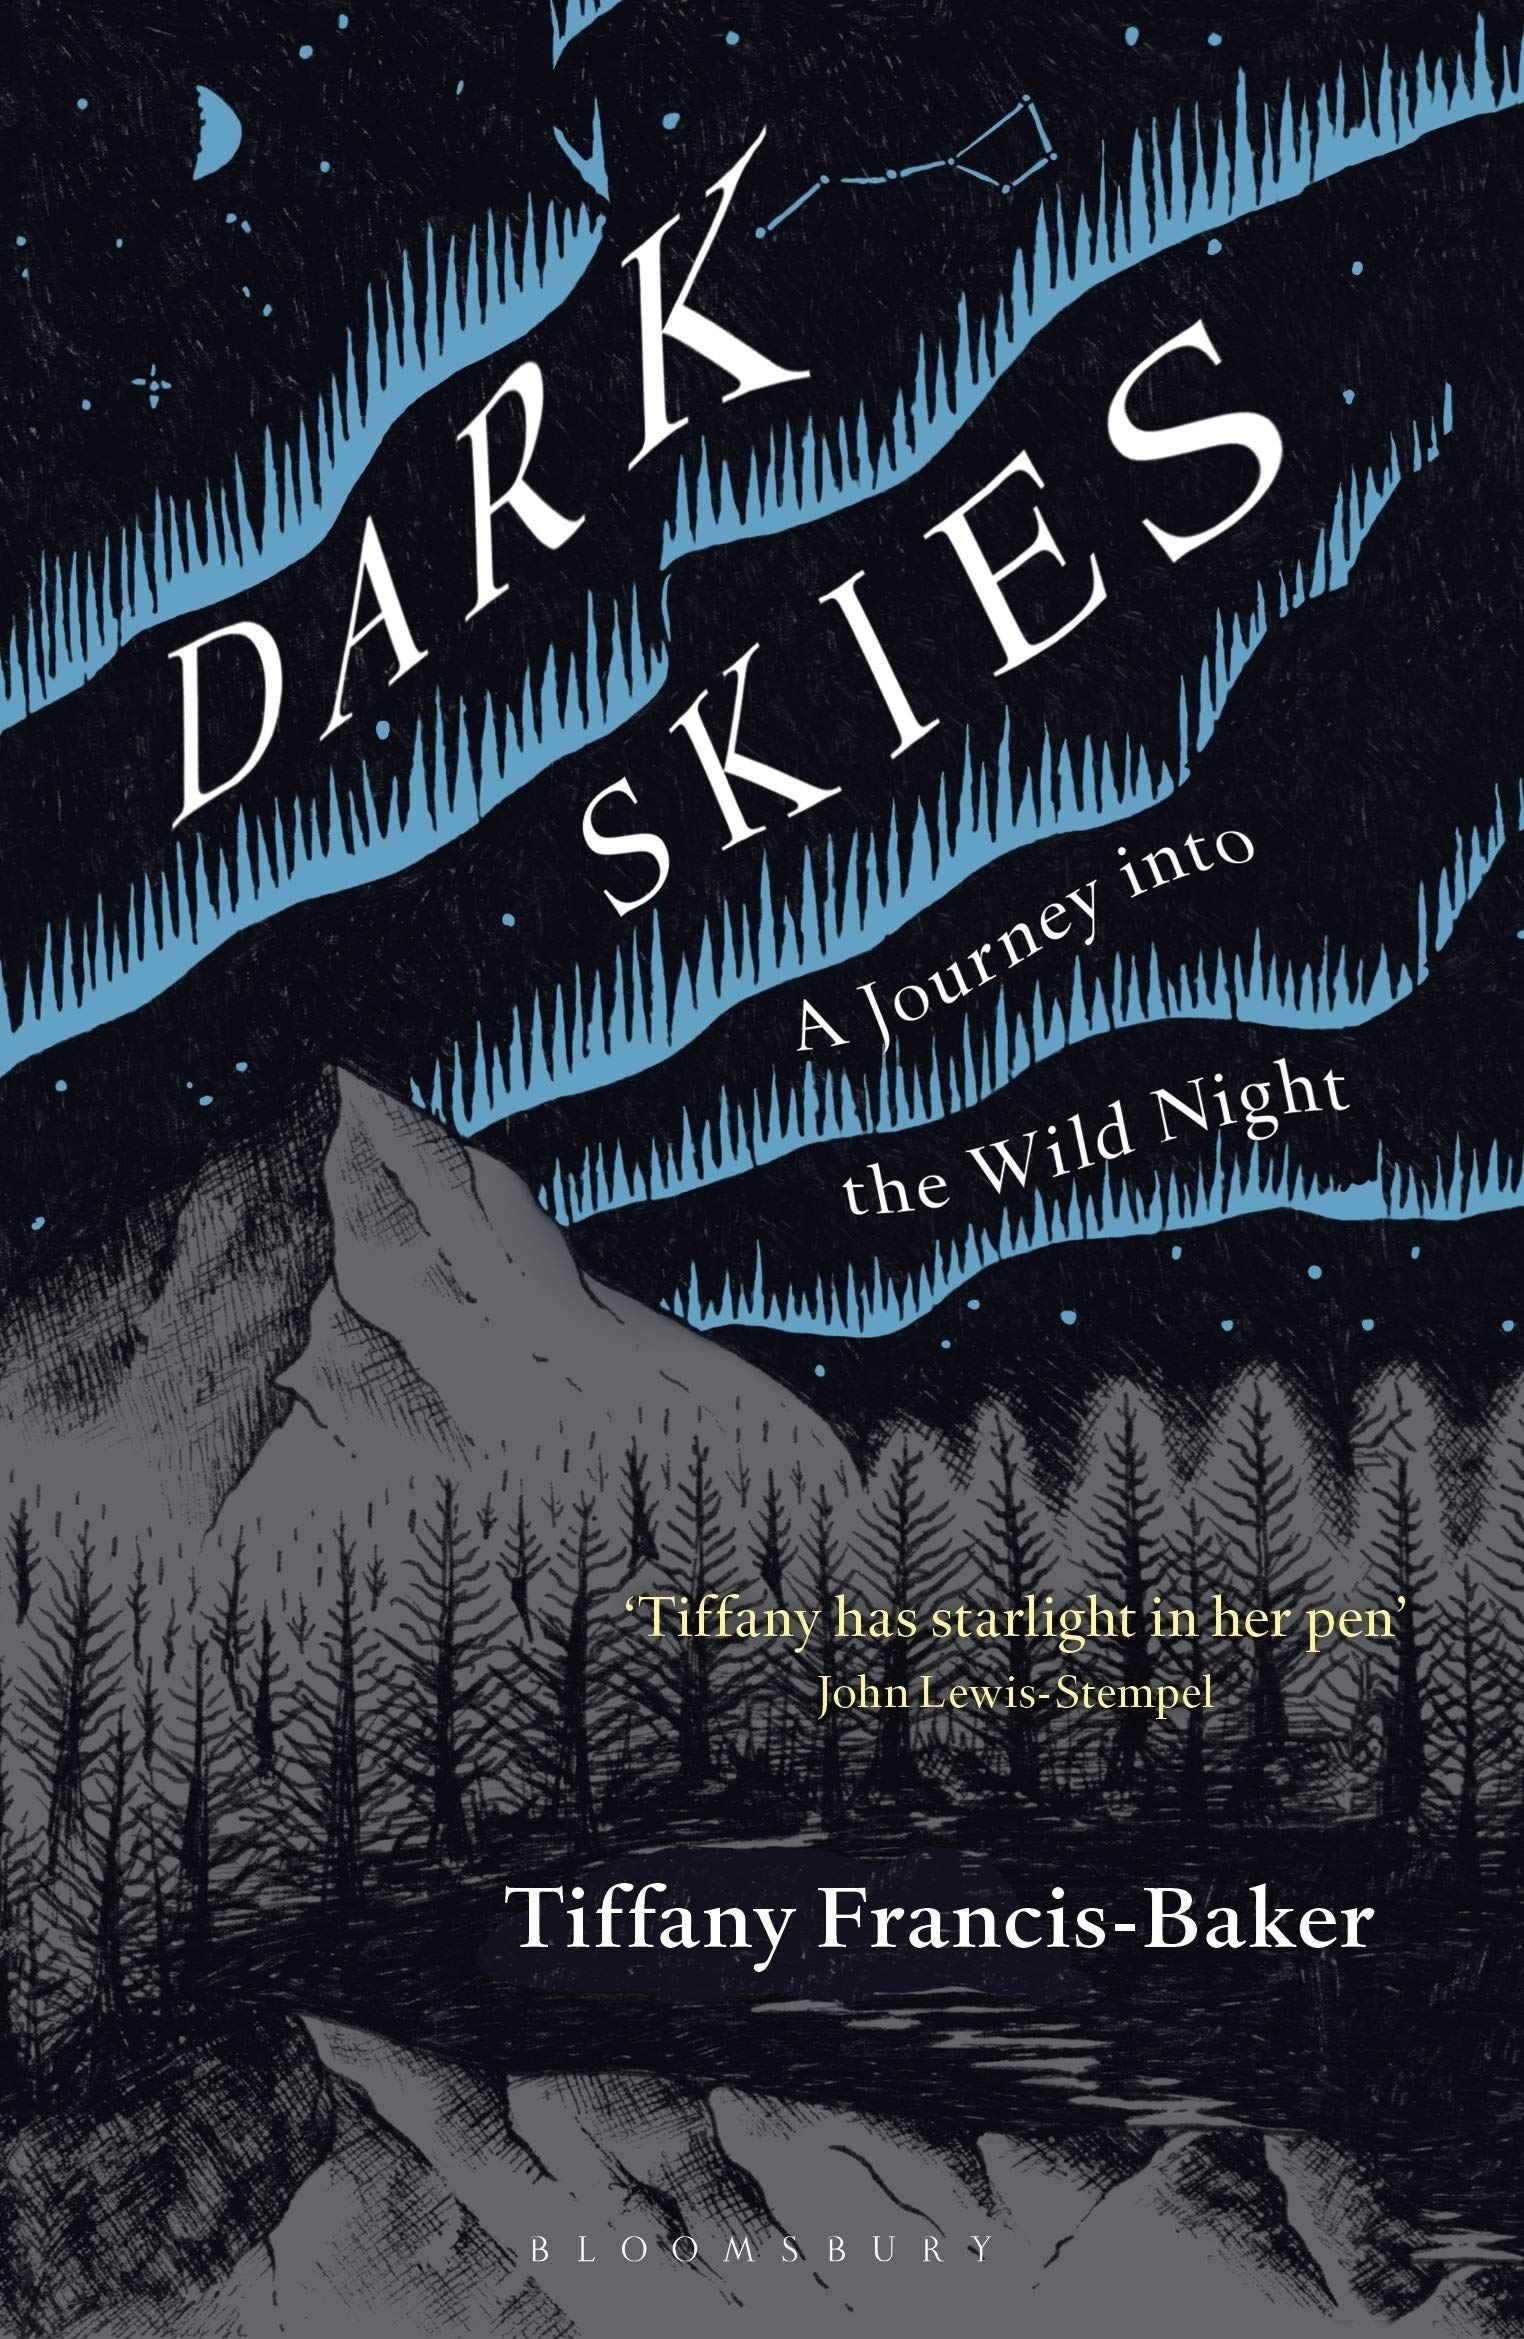 Dark Skies: A Journey In To The Wild Night